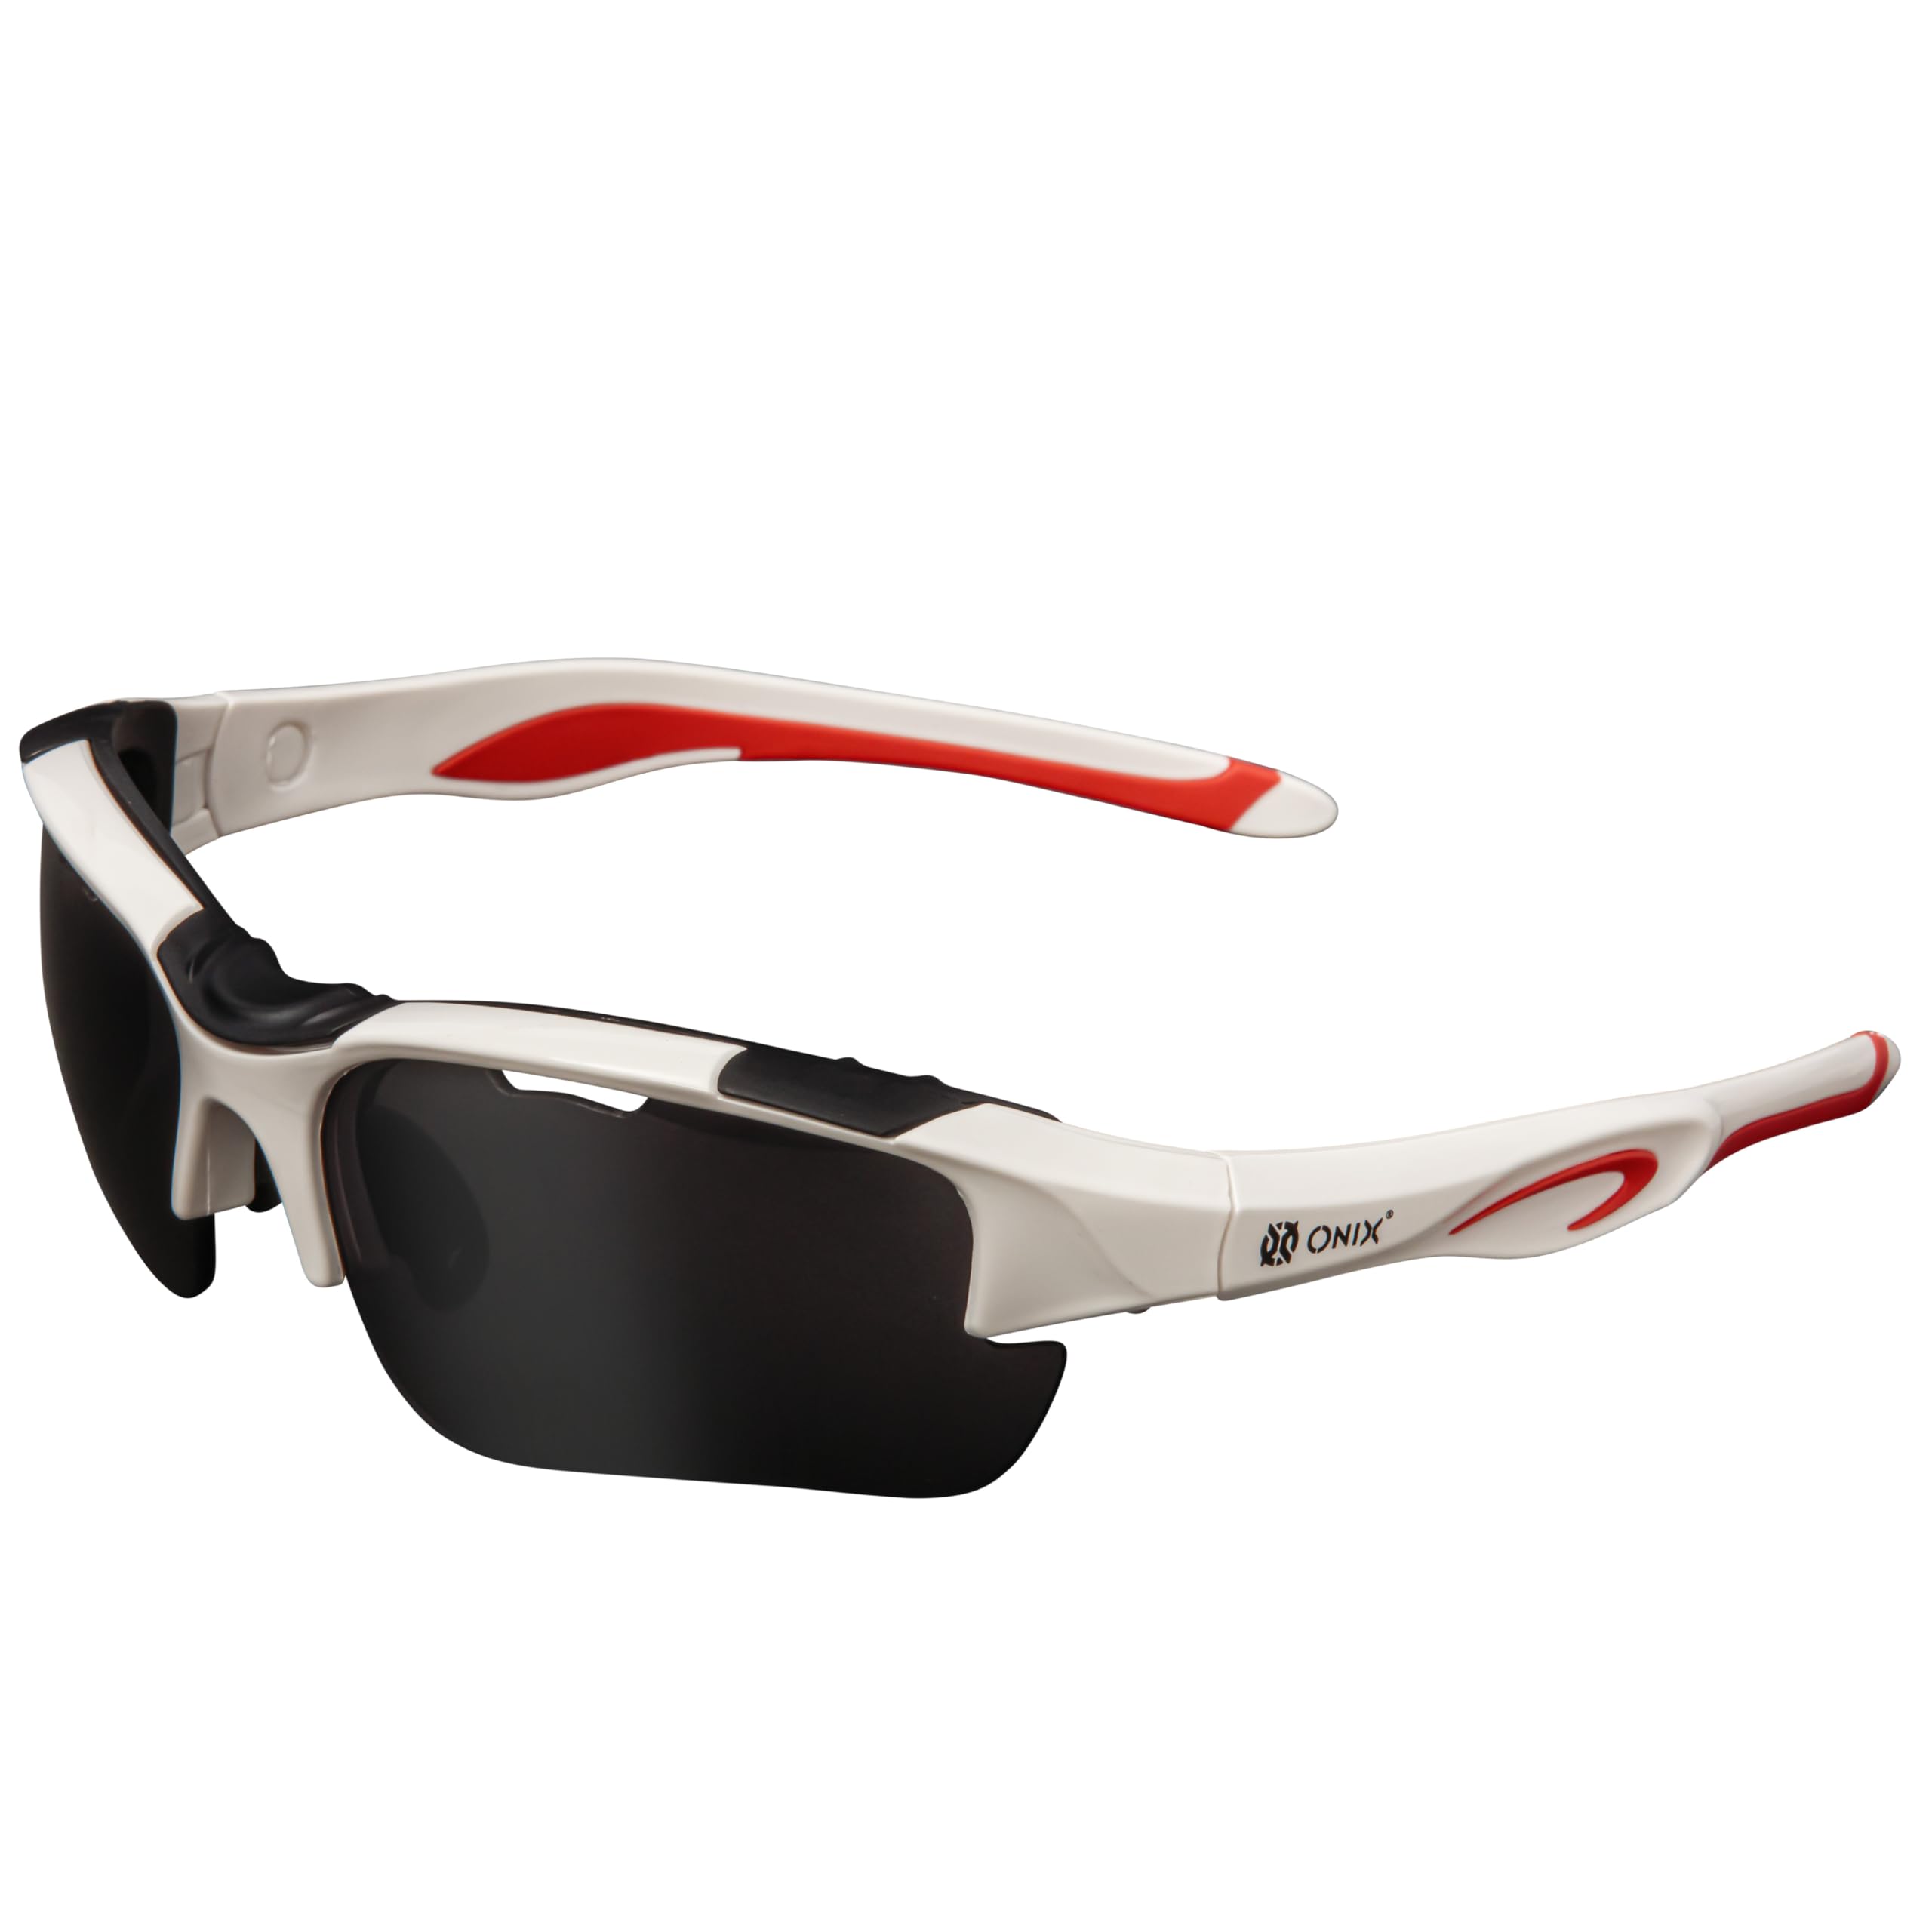 ONIX Pickleball Falcon Eyewear Sun Protection Non-Slip Nose Piece Modern and Lightweight Secure Design